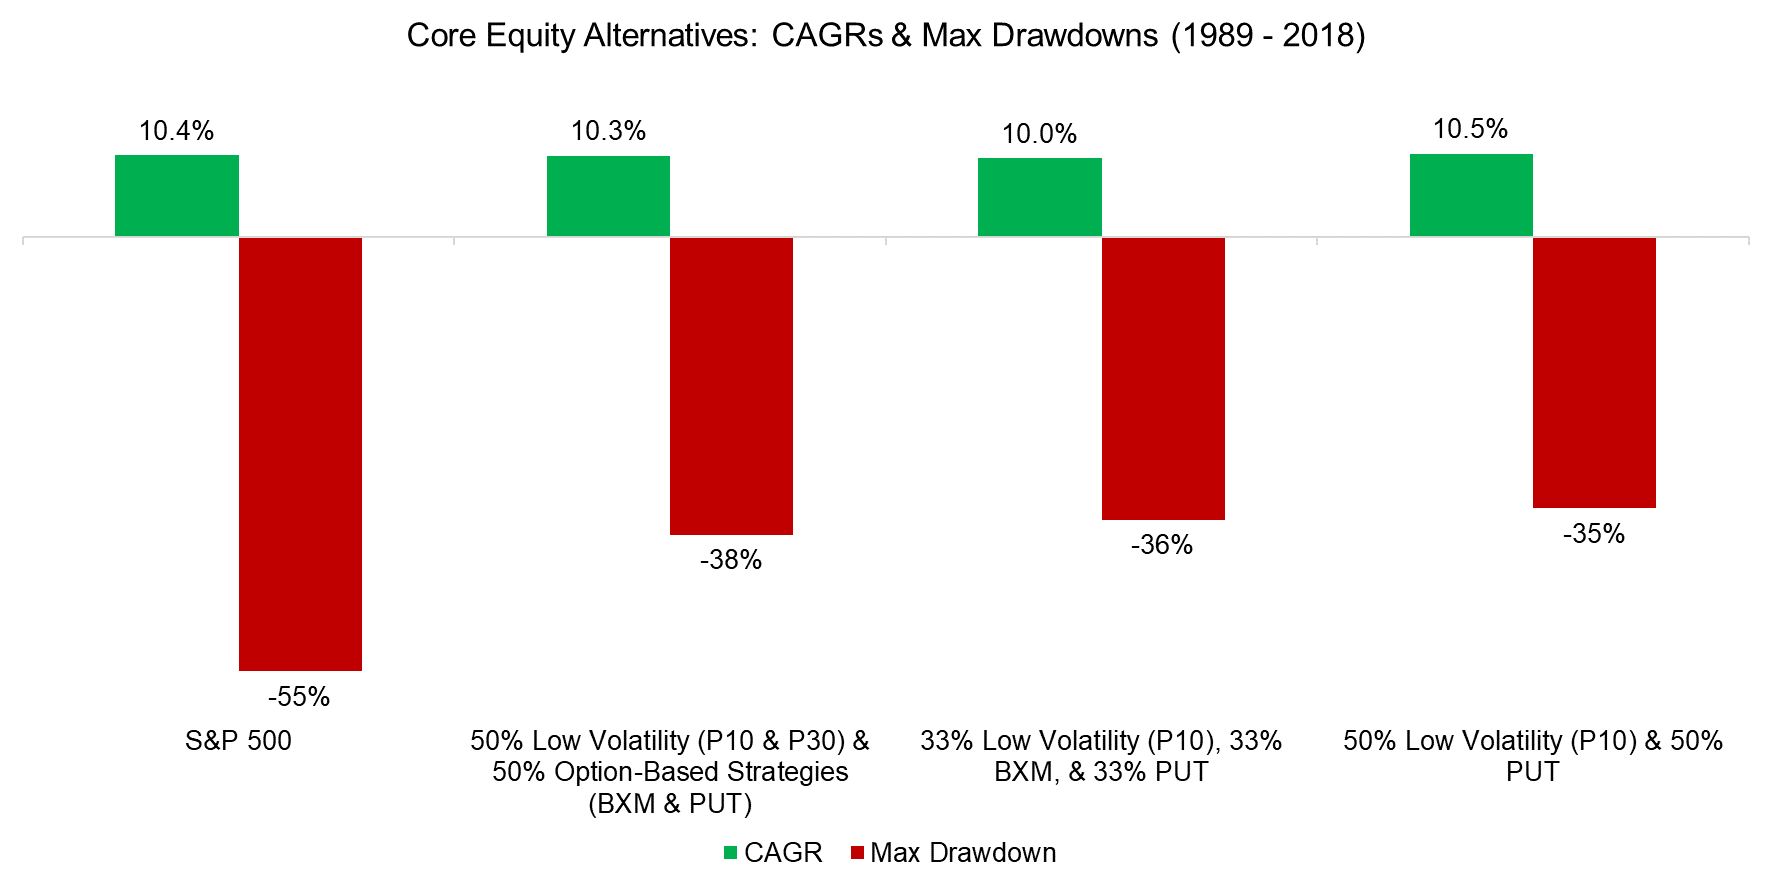 Core Equity Alternatives CAGRs & Max Drawdowns (1989 - 2018)